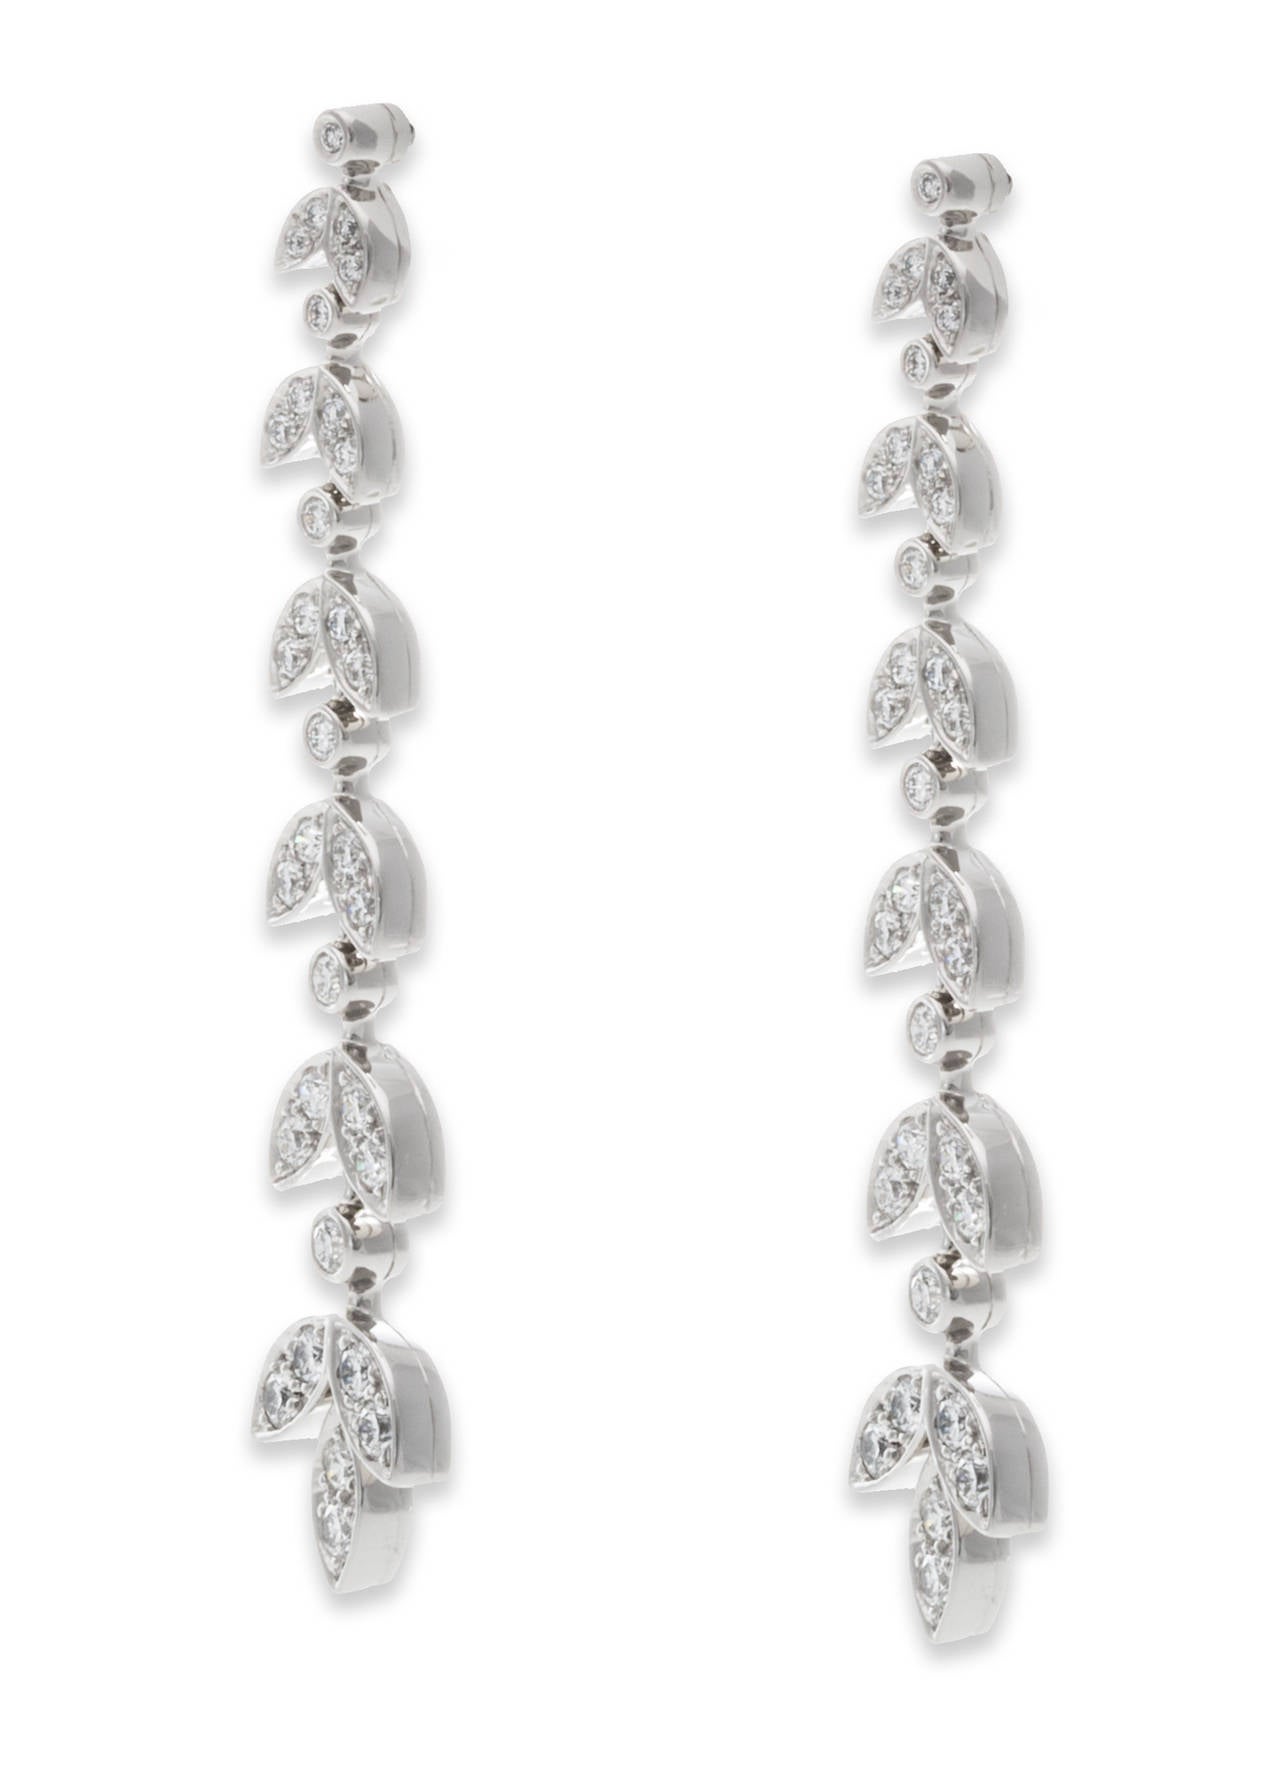 Tiffany & Co. Diamond Earrings in Platinum with Round Diamonds, Total Diamond Weight 1.60ct, Hallmark: 